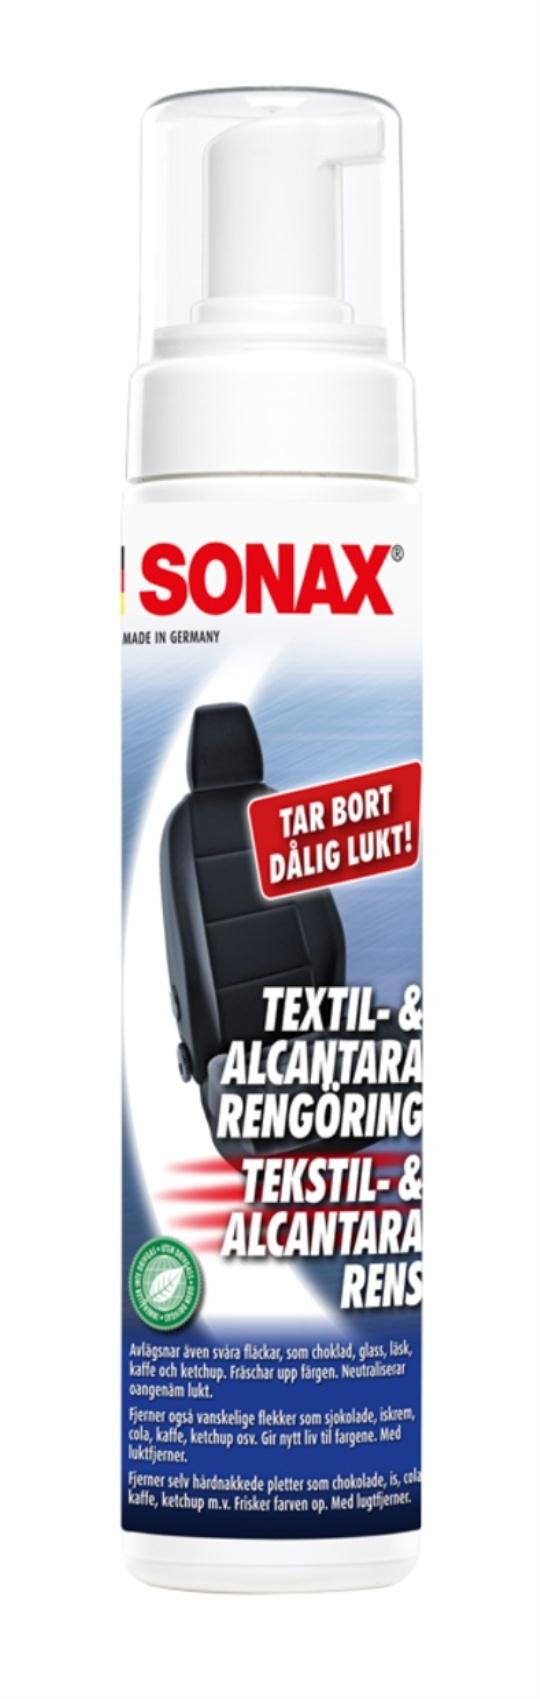 Sonax Xtreme Tekstil & Alcantara rens 250ml